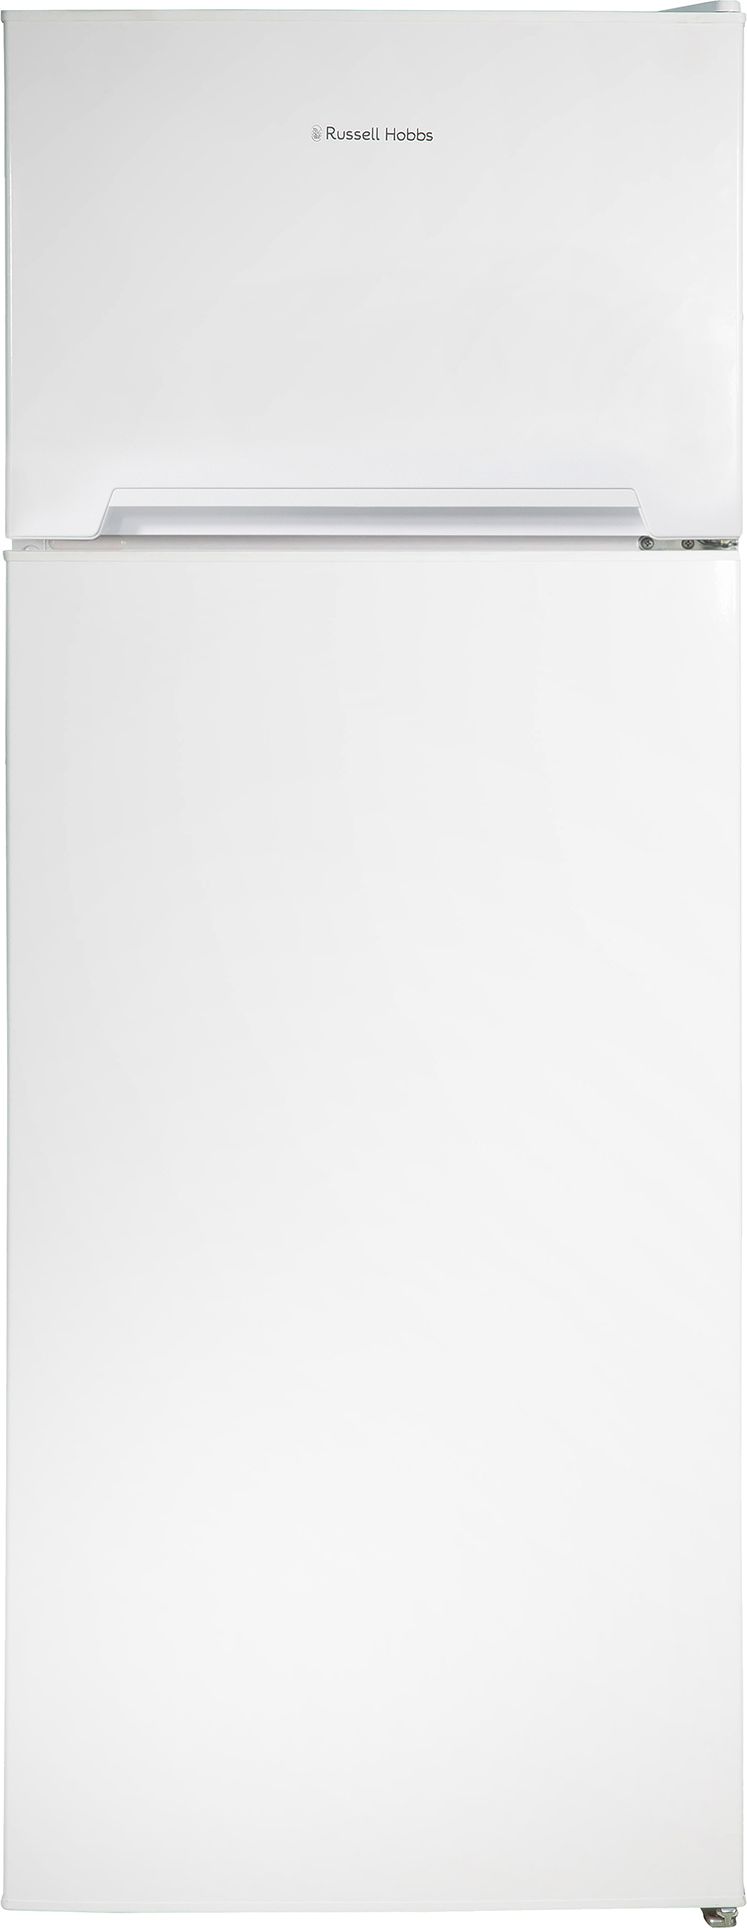 Russell Hobbs RH144TMFF541E1W Compact 145cm High 80/20 Fridge Freezer - White - E Rated, White